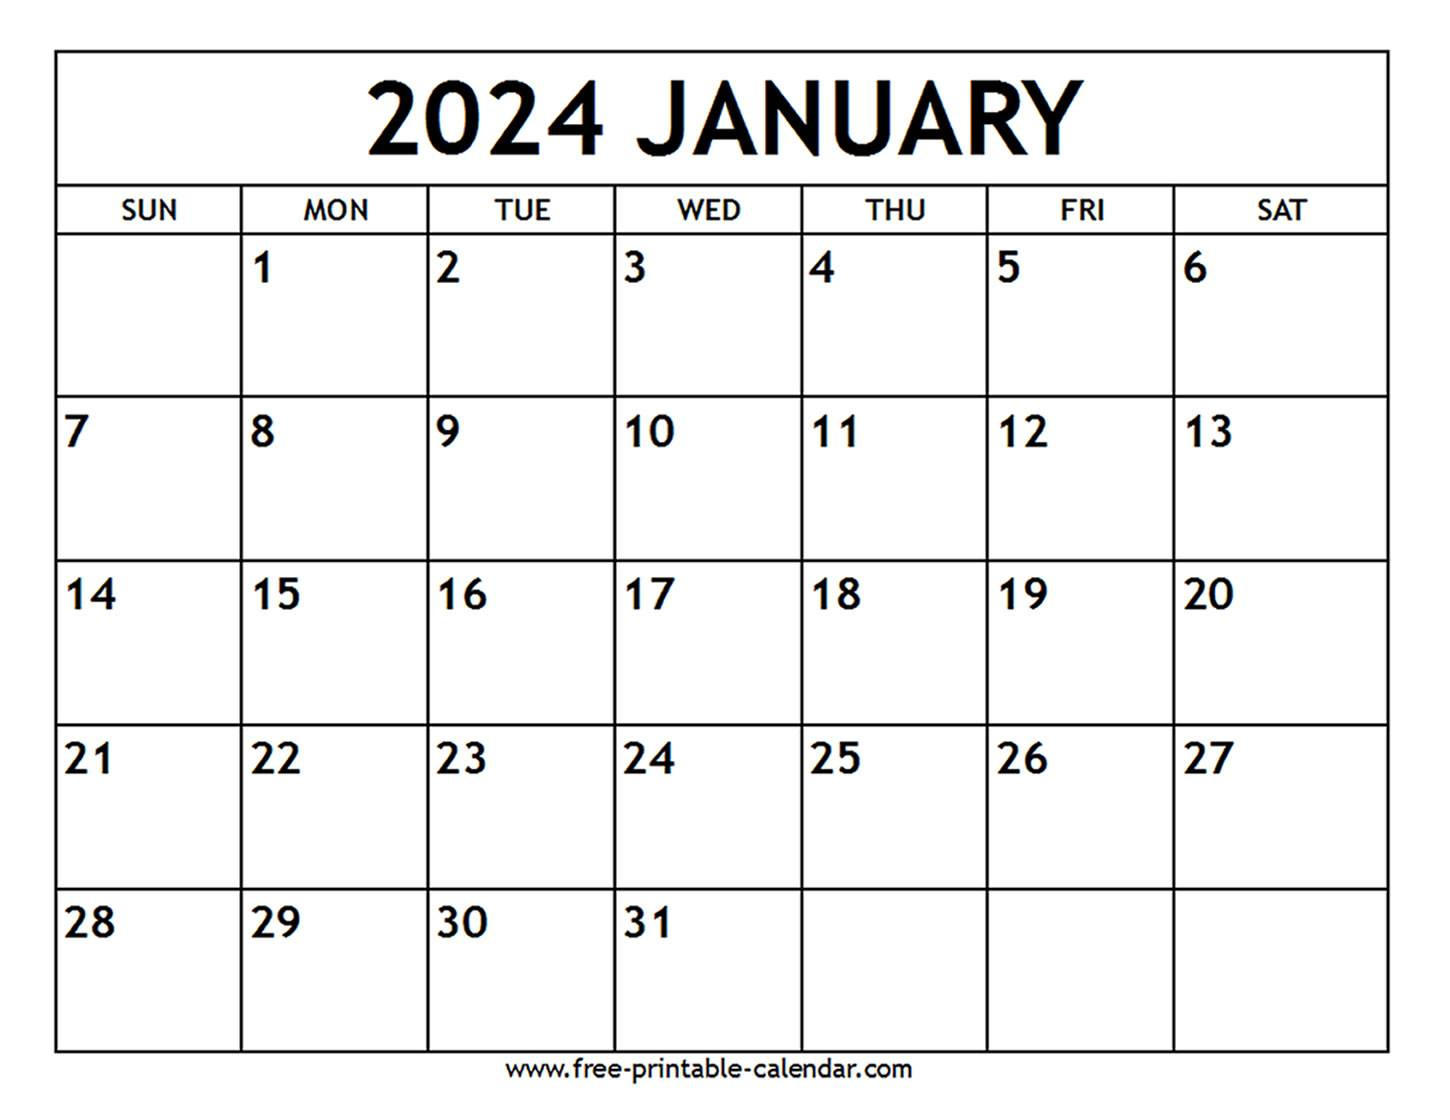 January 2024 Calendar - Free-Printable-Calendar | Printable Calendar 2024 January Free